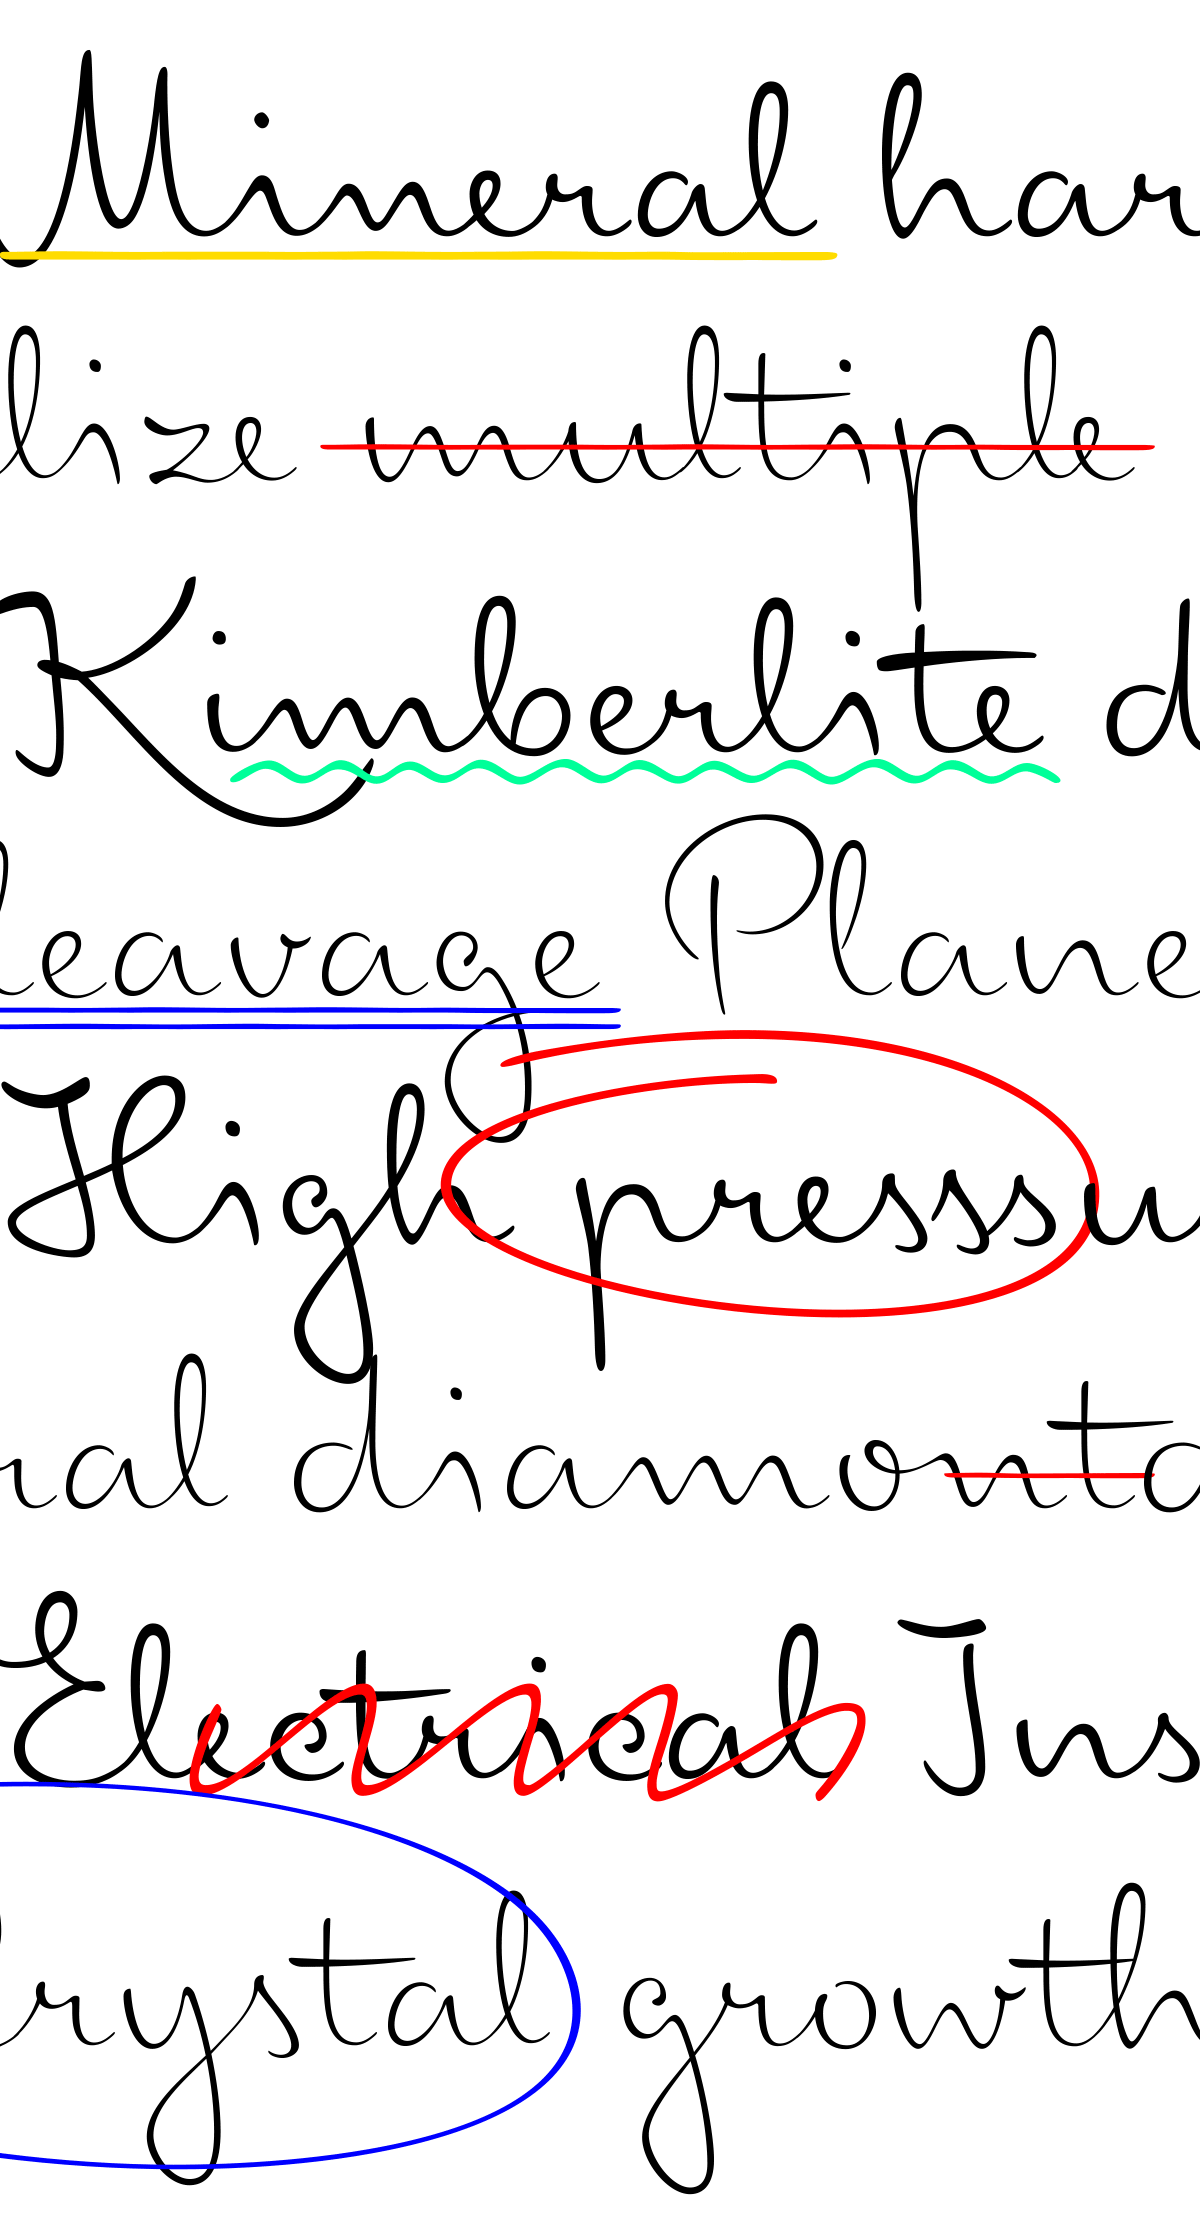 FontFont font ff type Typeface Mister K splendid Sysmäläinen Script handwriting kafka manuscript